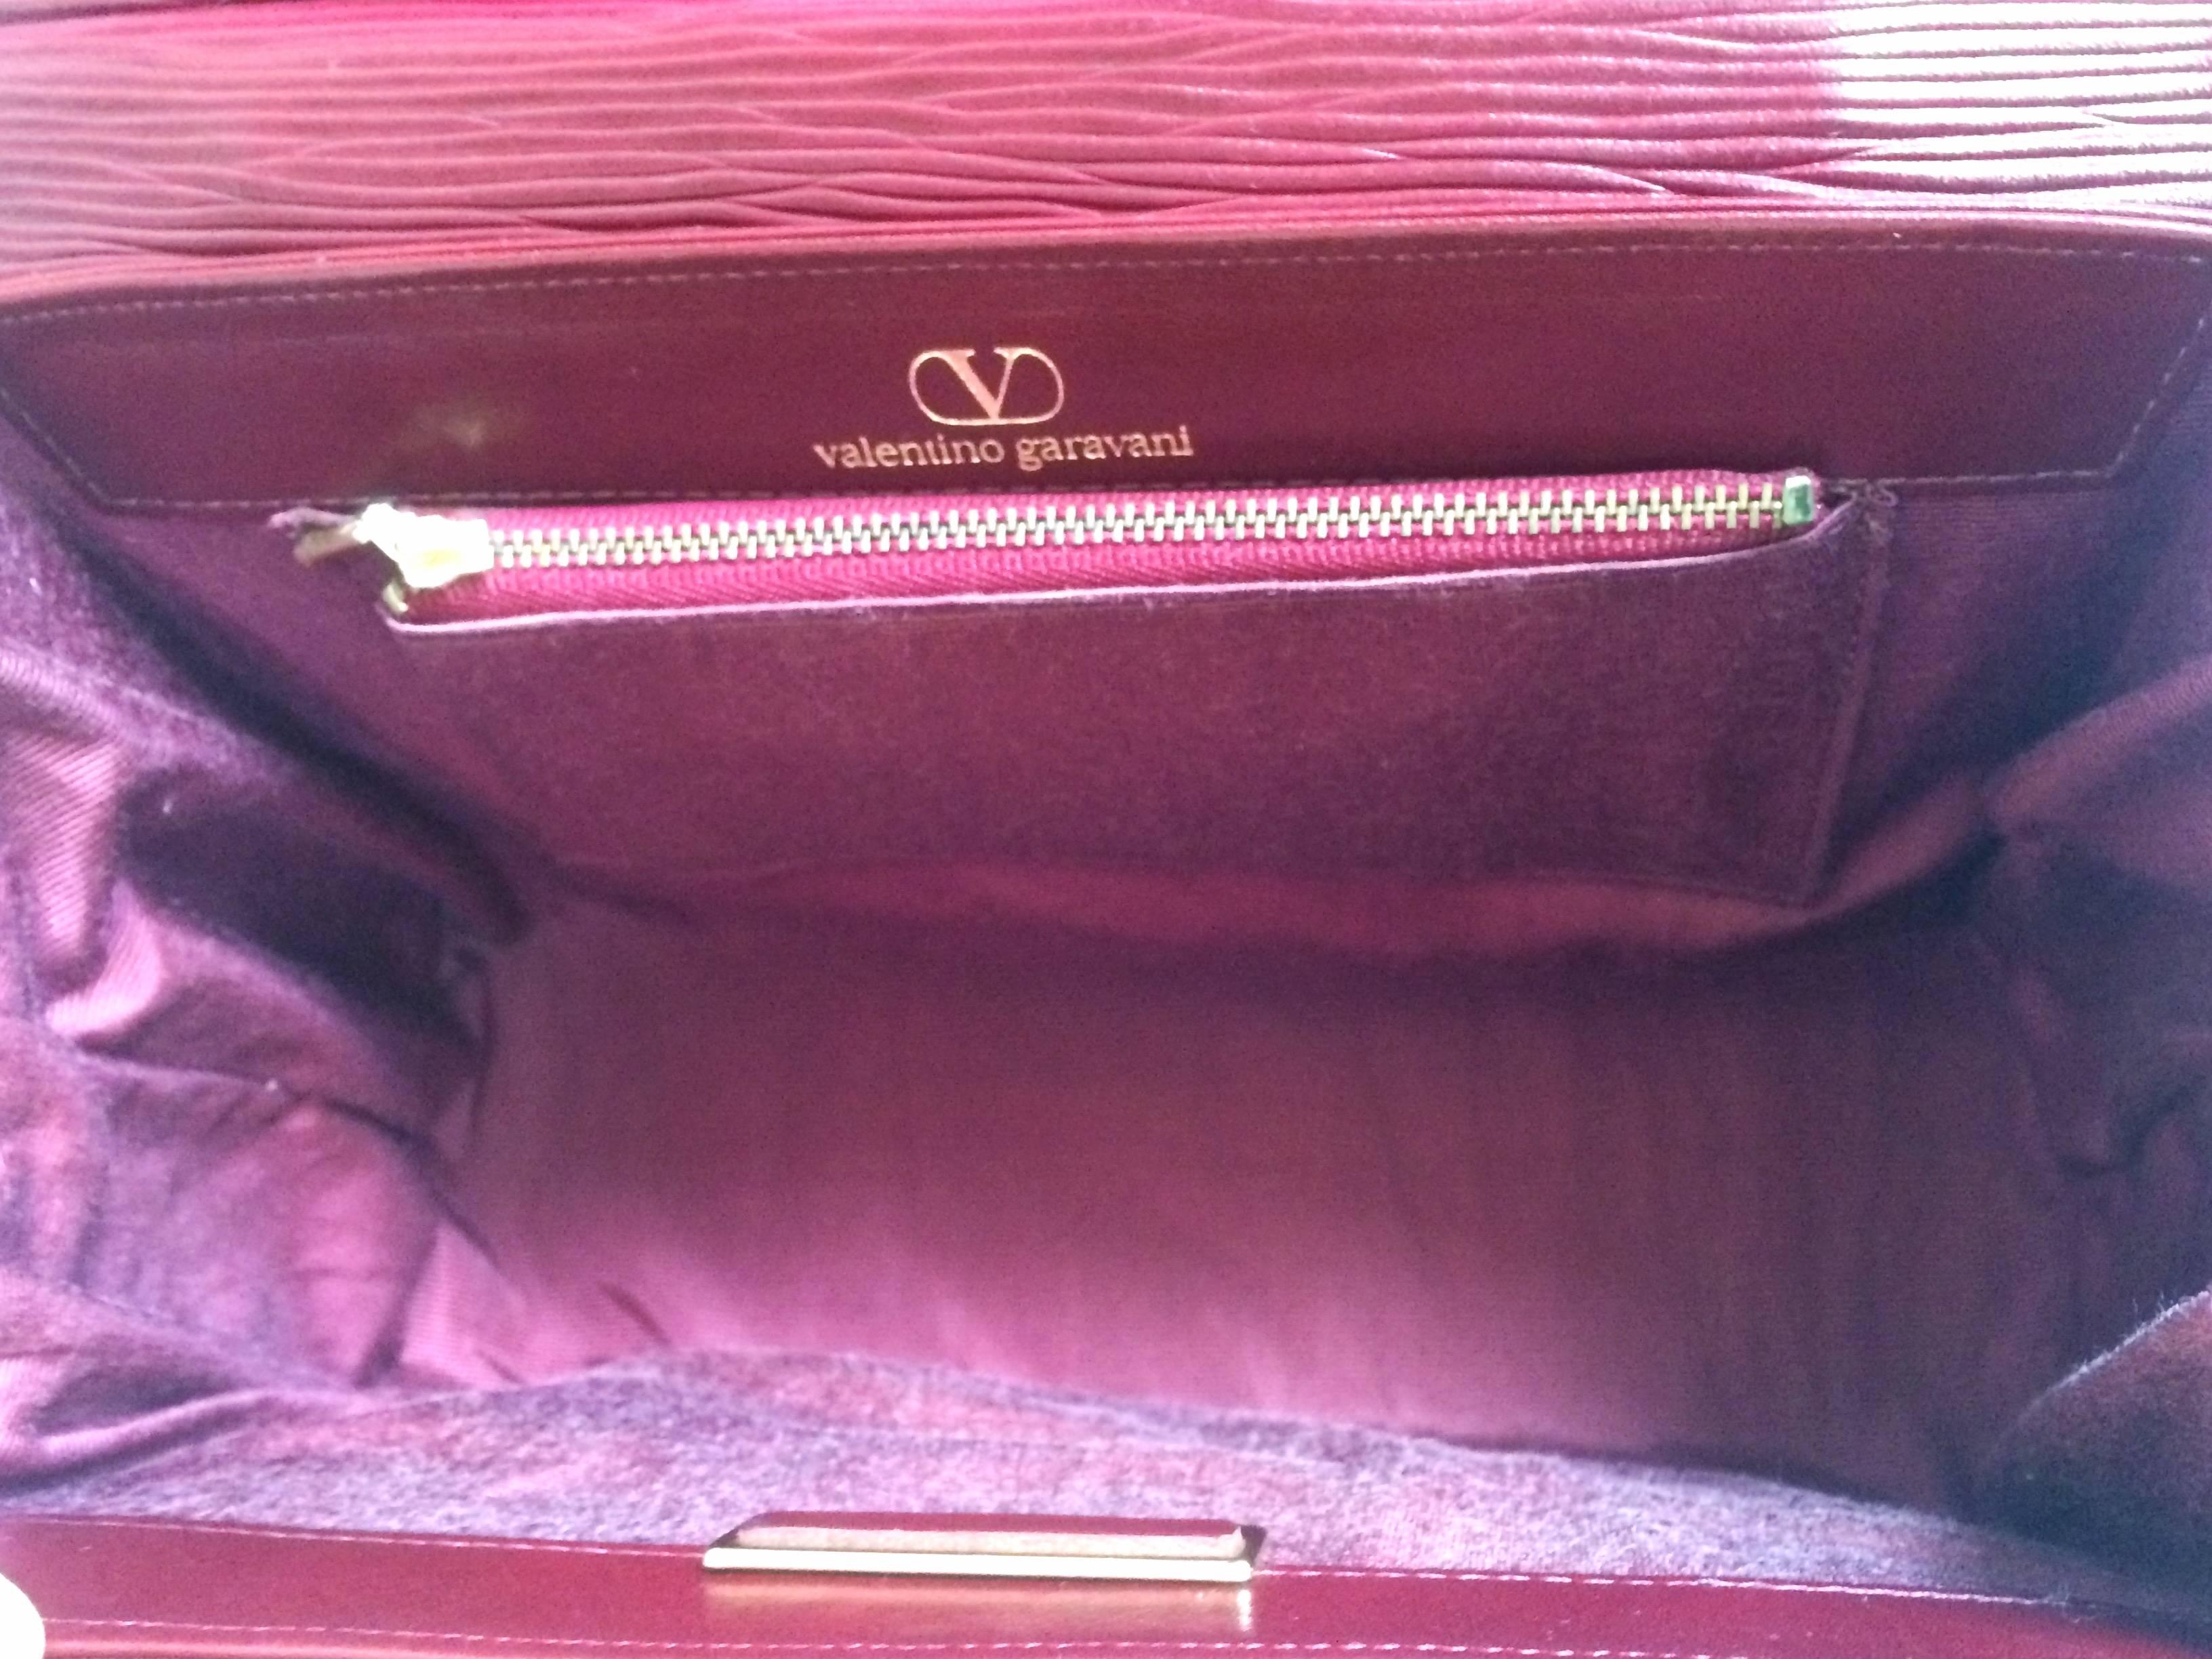 Women's Vintage Valentino Garavani wine epi and smooth leather handbag with buckle flap.